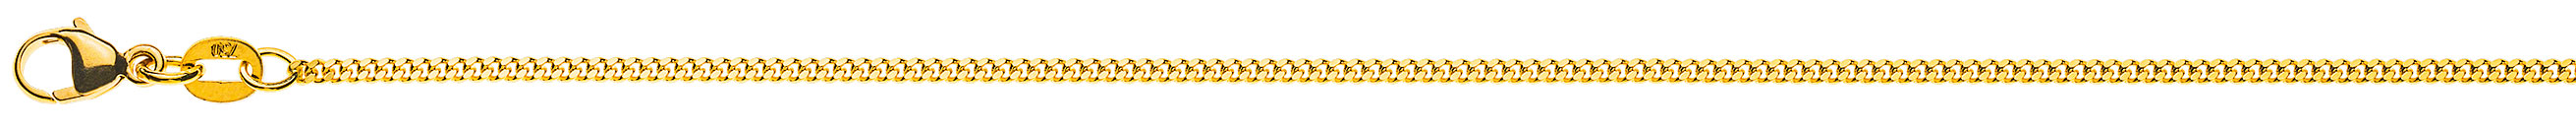 AURONOS Prestige Necklace yellow gold 18K curb chain polished 40cm 1.6mm